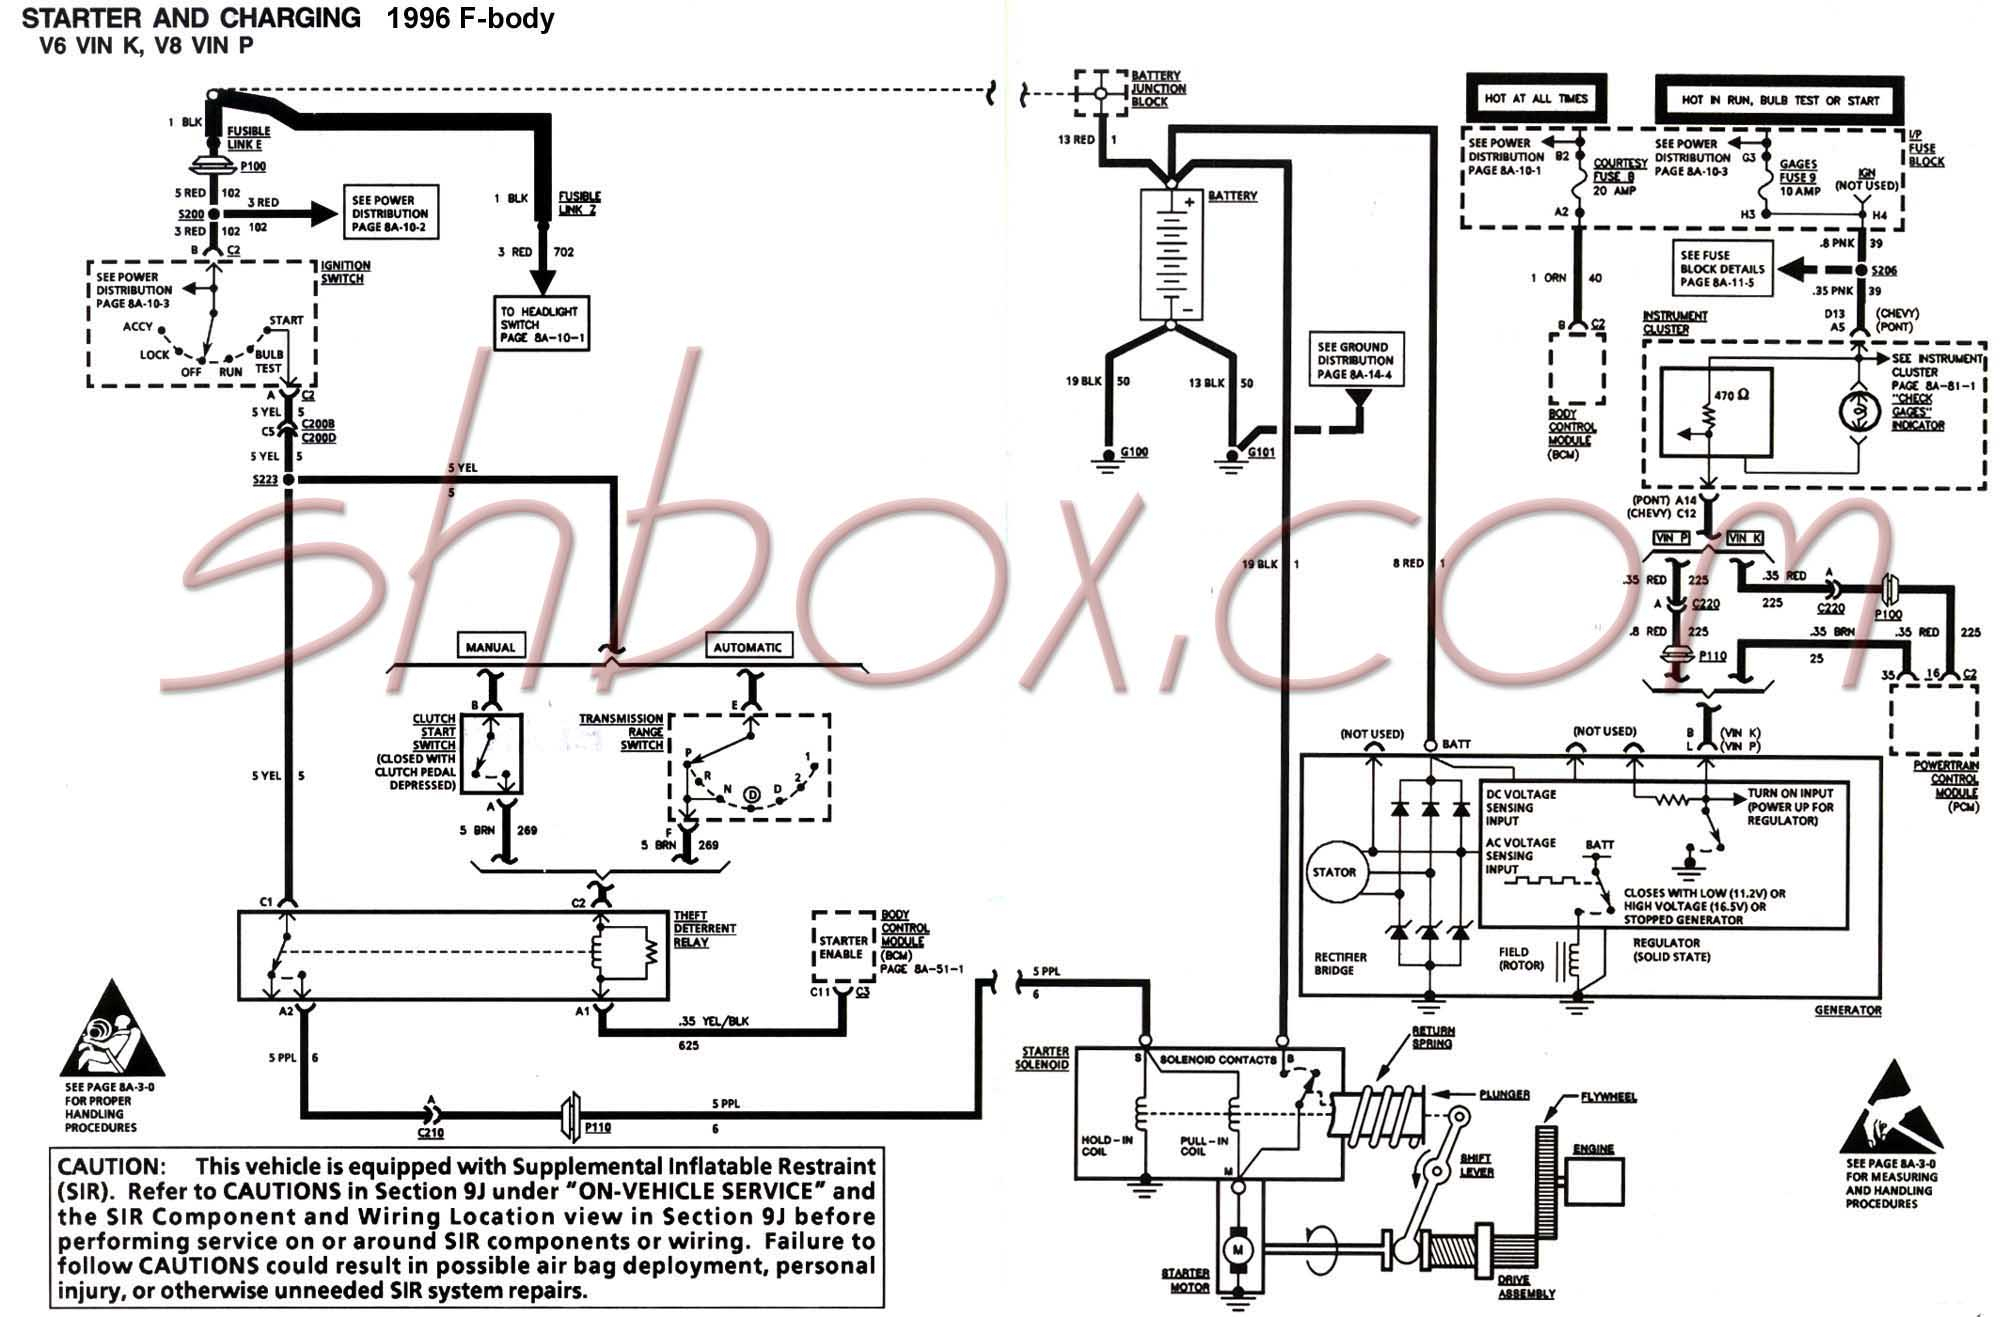 Lt1 Ignition Control Module Wiring Diagram - Wiring Library - Ford Ignition Control Module Wiring Diagram